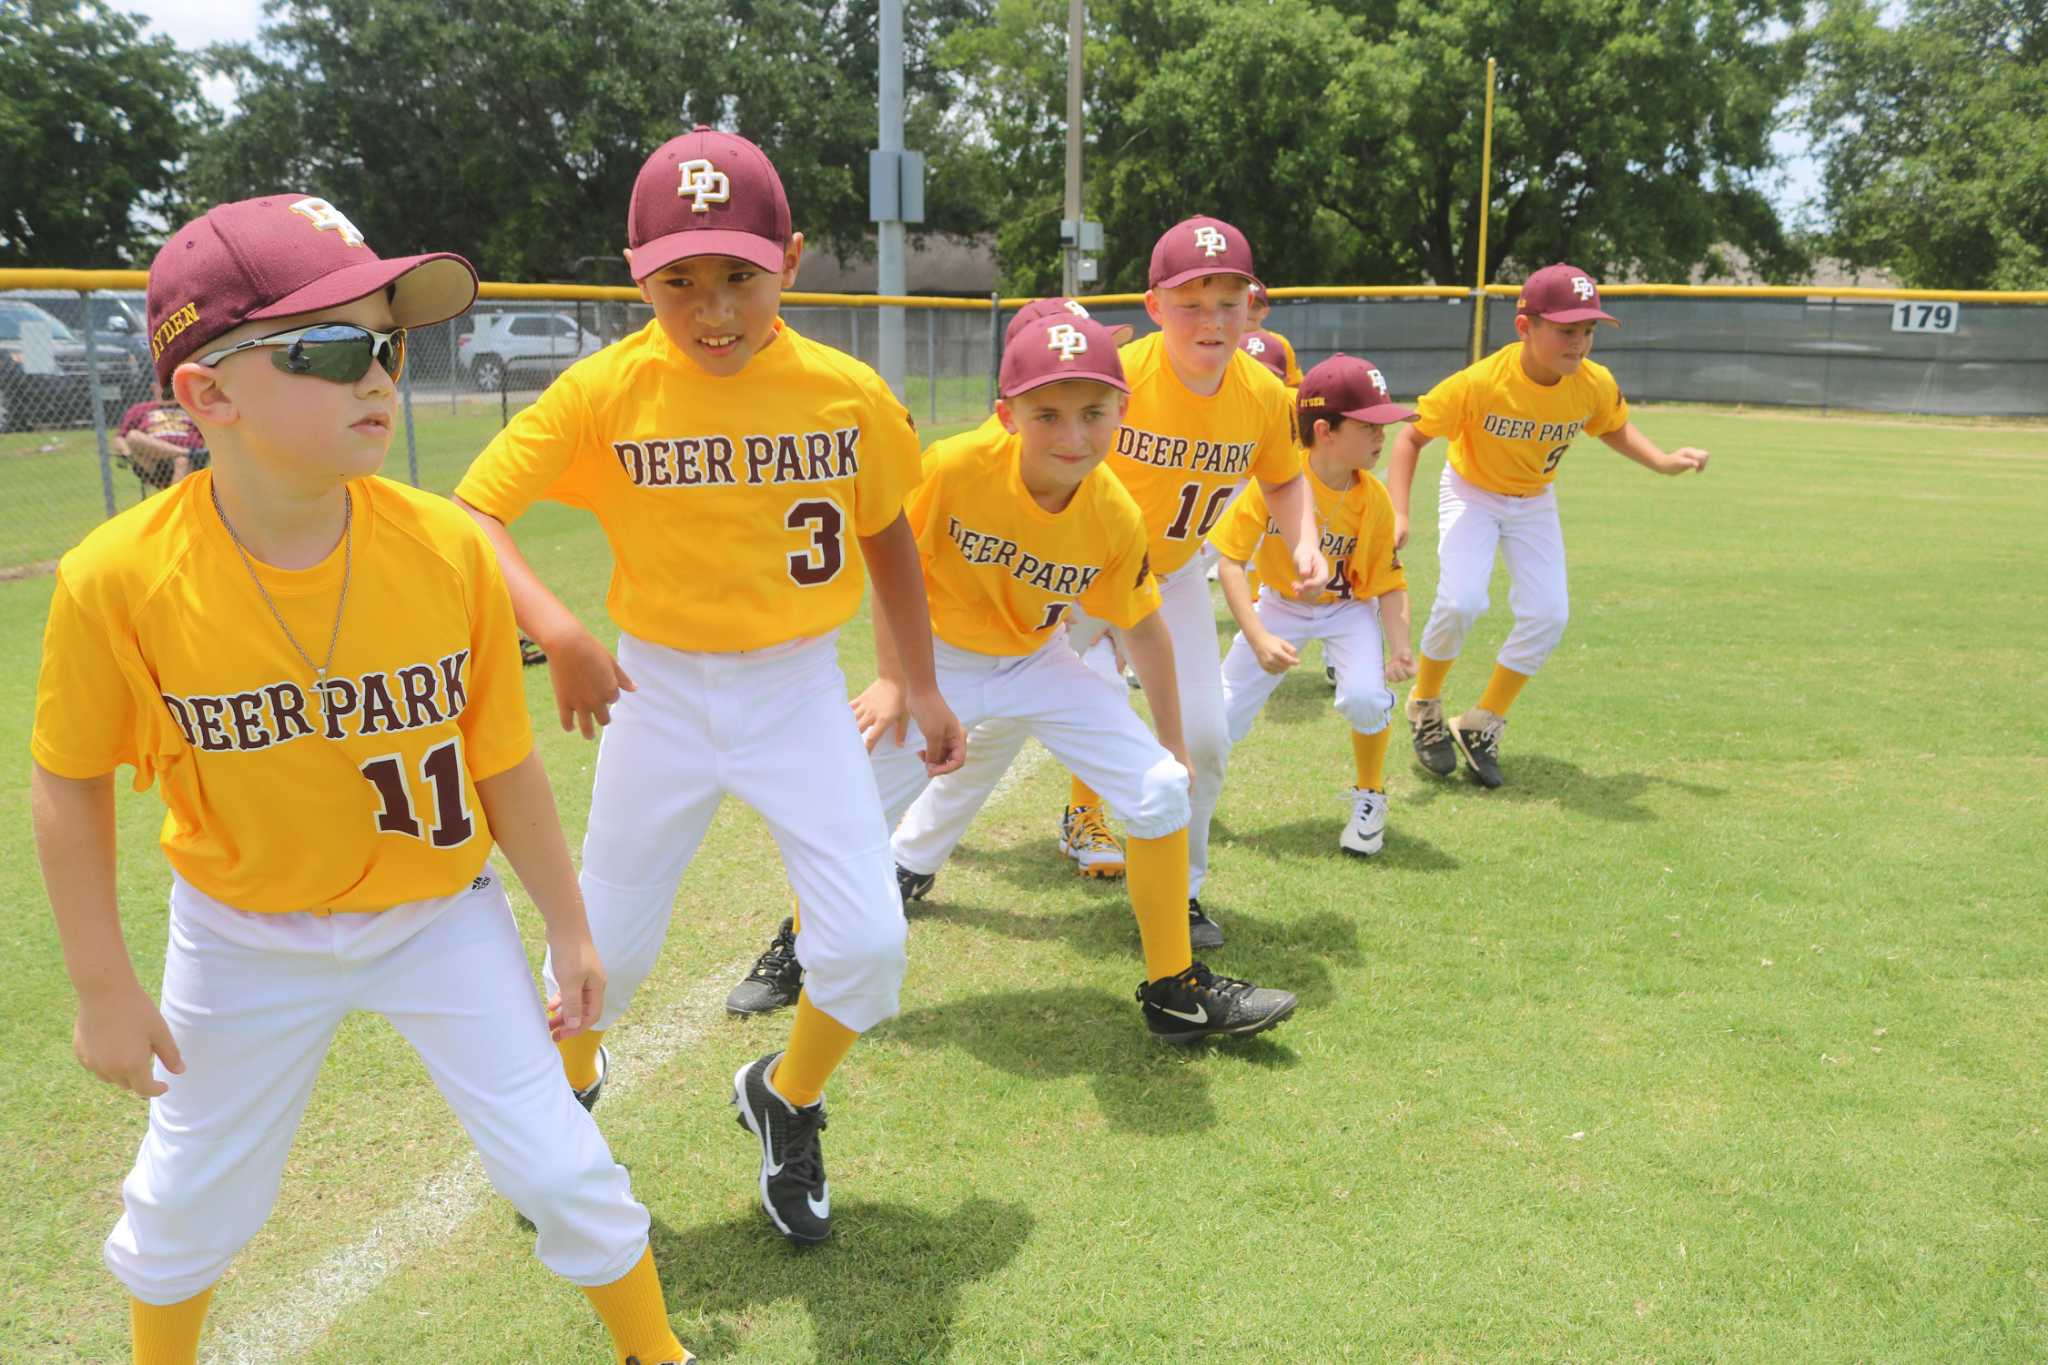 Deer Park's success rekindles thoughts of 1990's state baseball runner-up  team